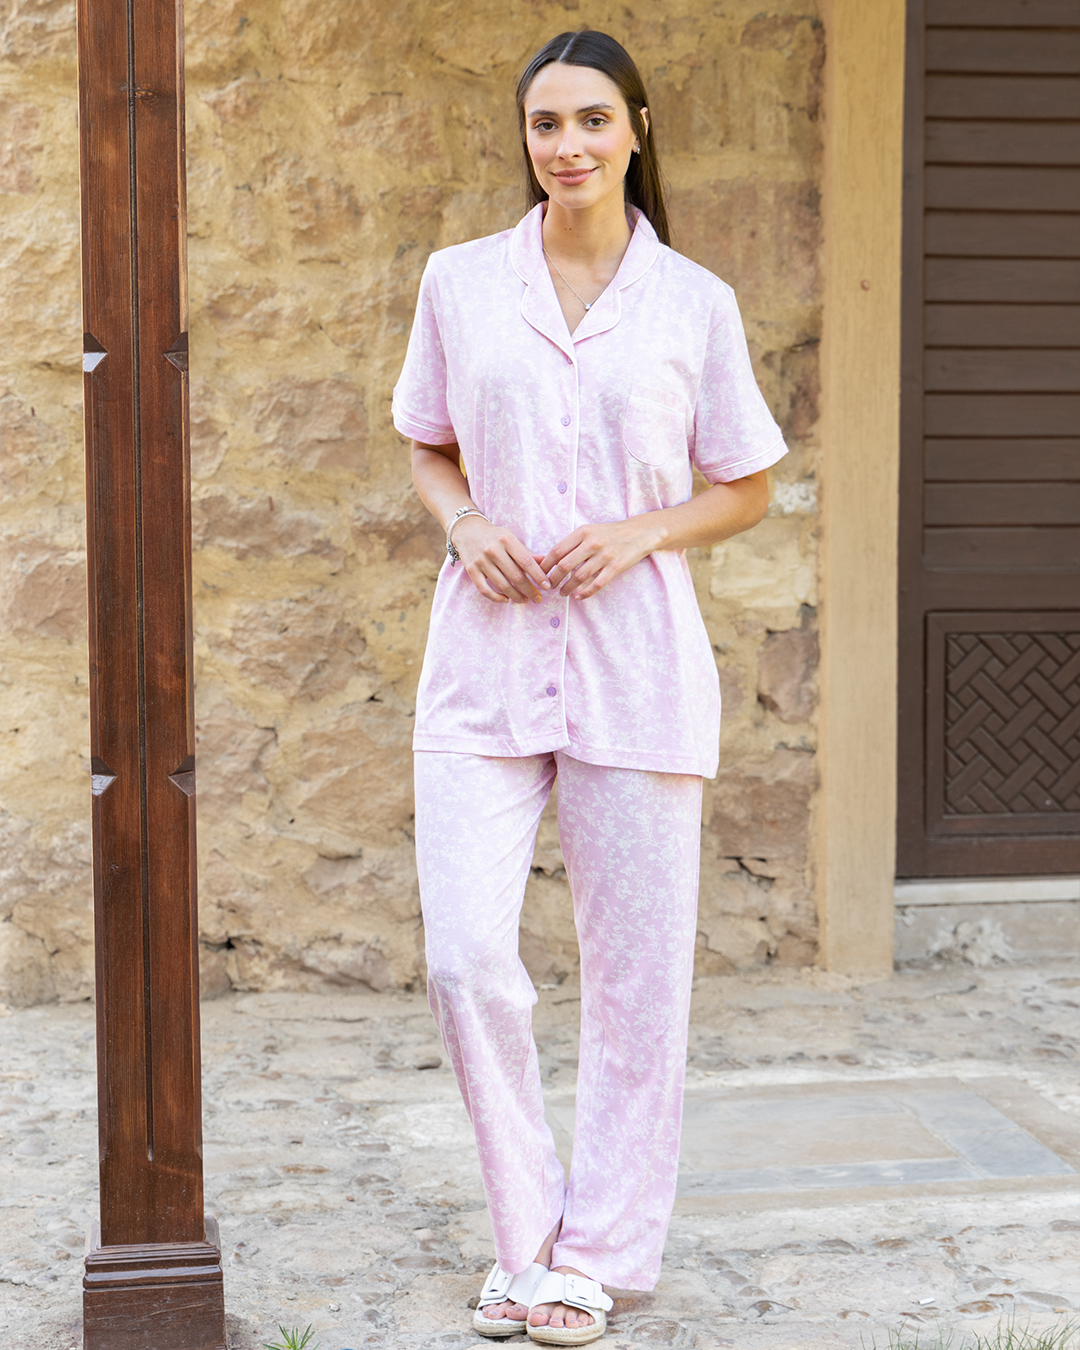 Women's classic pajamas with butterflies print pants